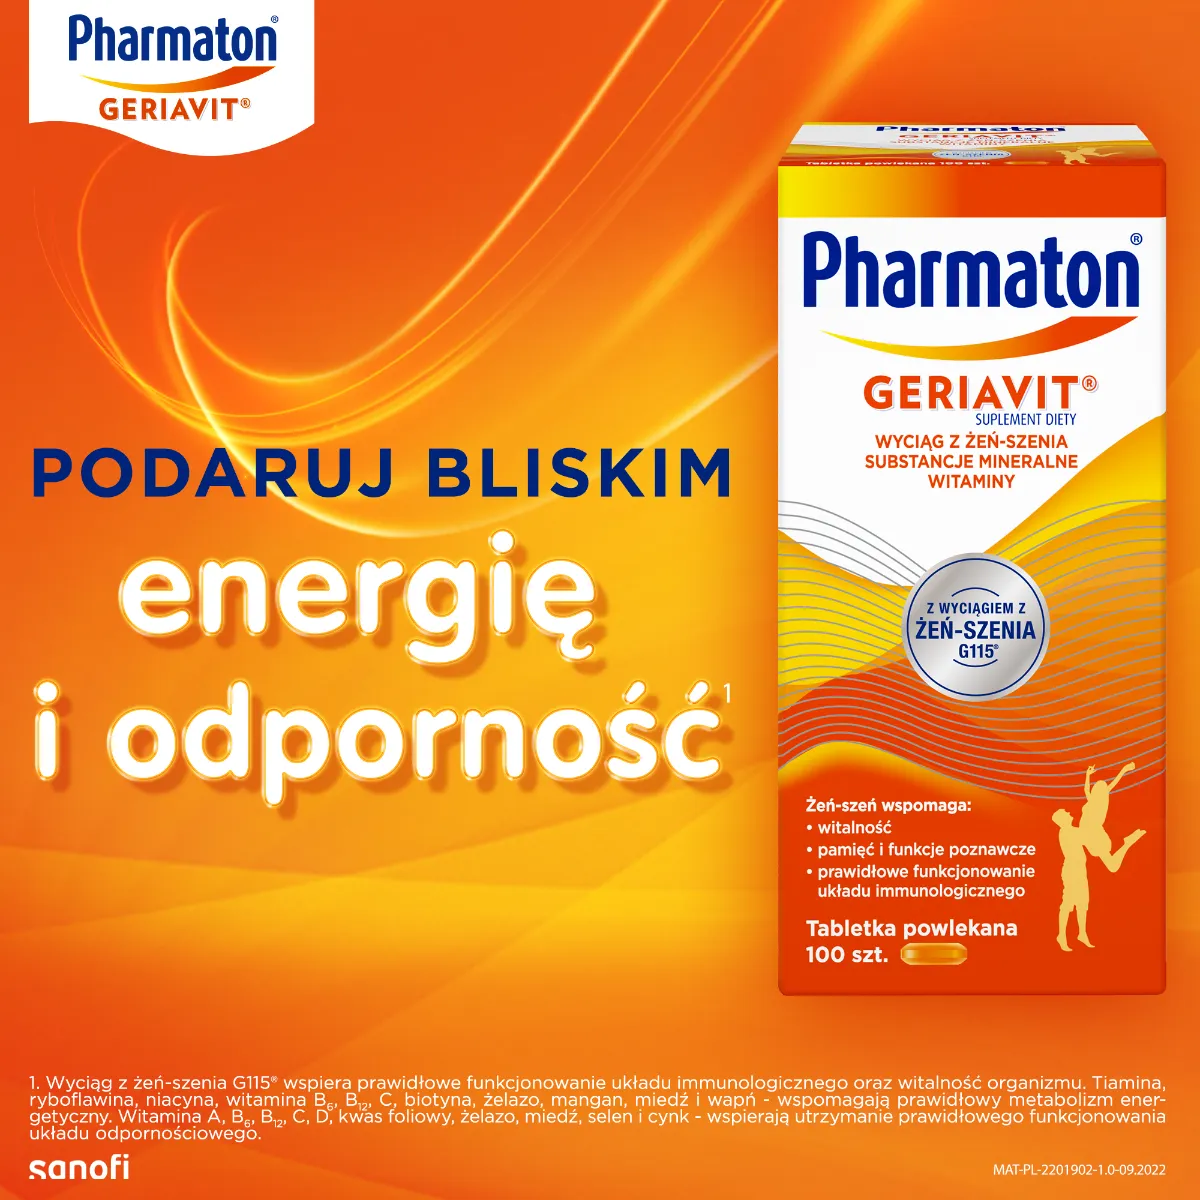 Pharmaton Geriavit, suplement diety, 100 tabletek powlekanych 